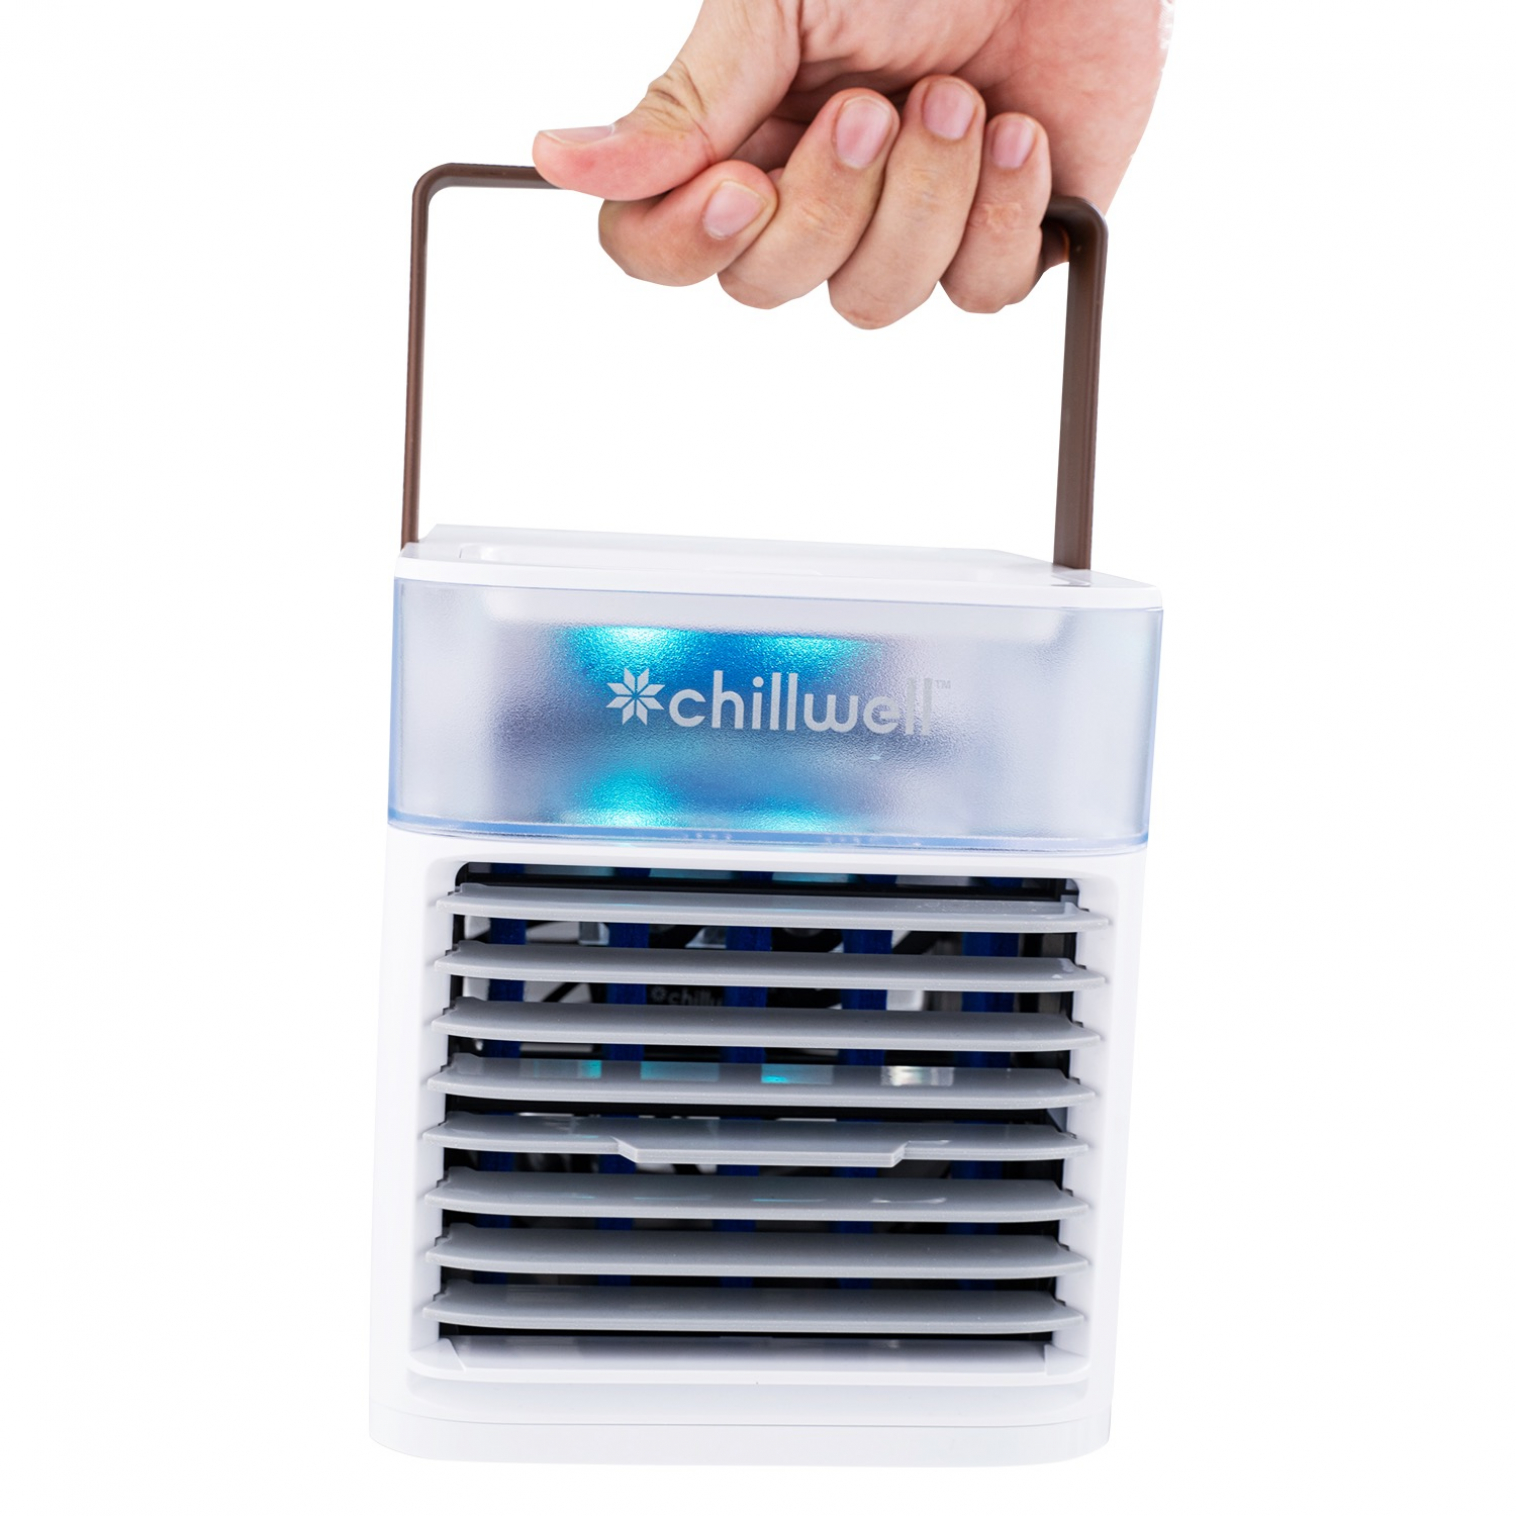 Chillwell AC Chill Box Reviews